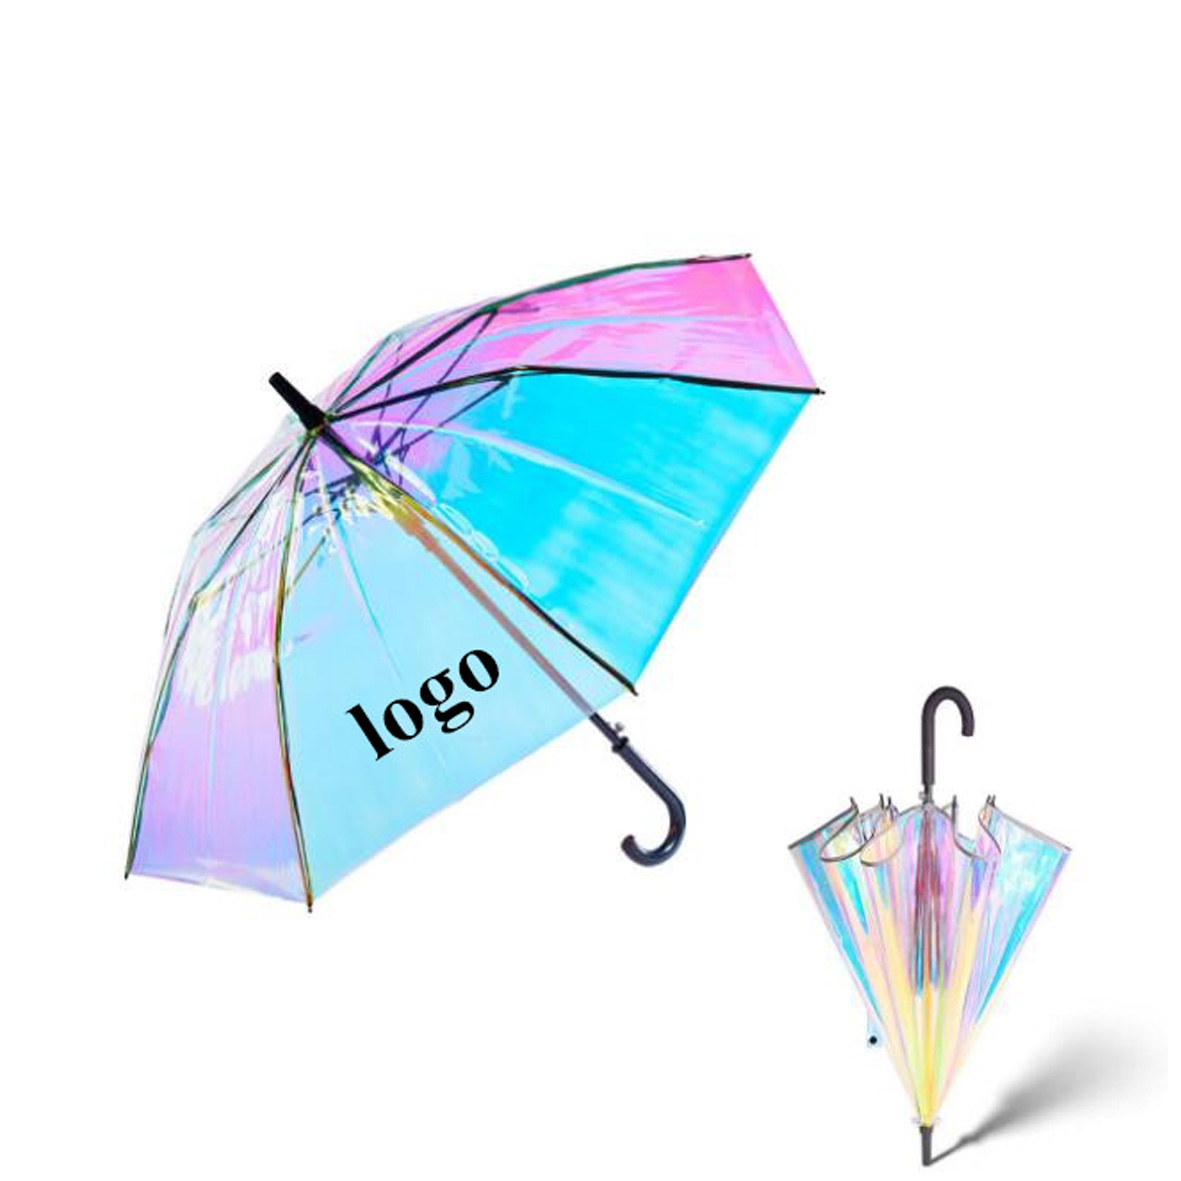 GL-JAH1009 Holographic Irridescent Laser Umbrella with Hook Handle